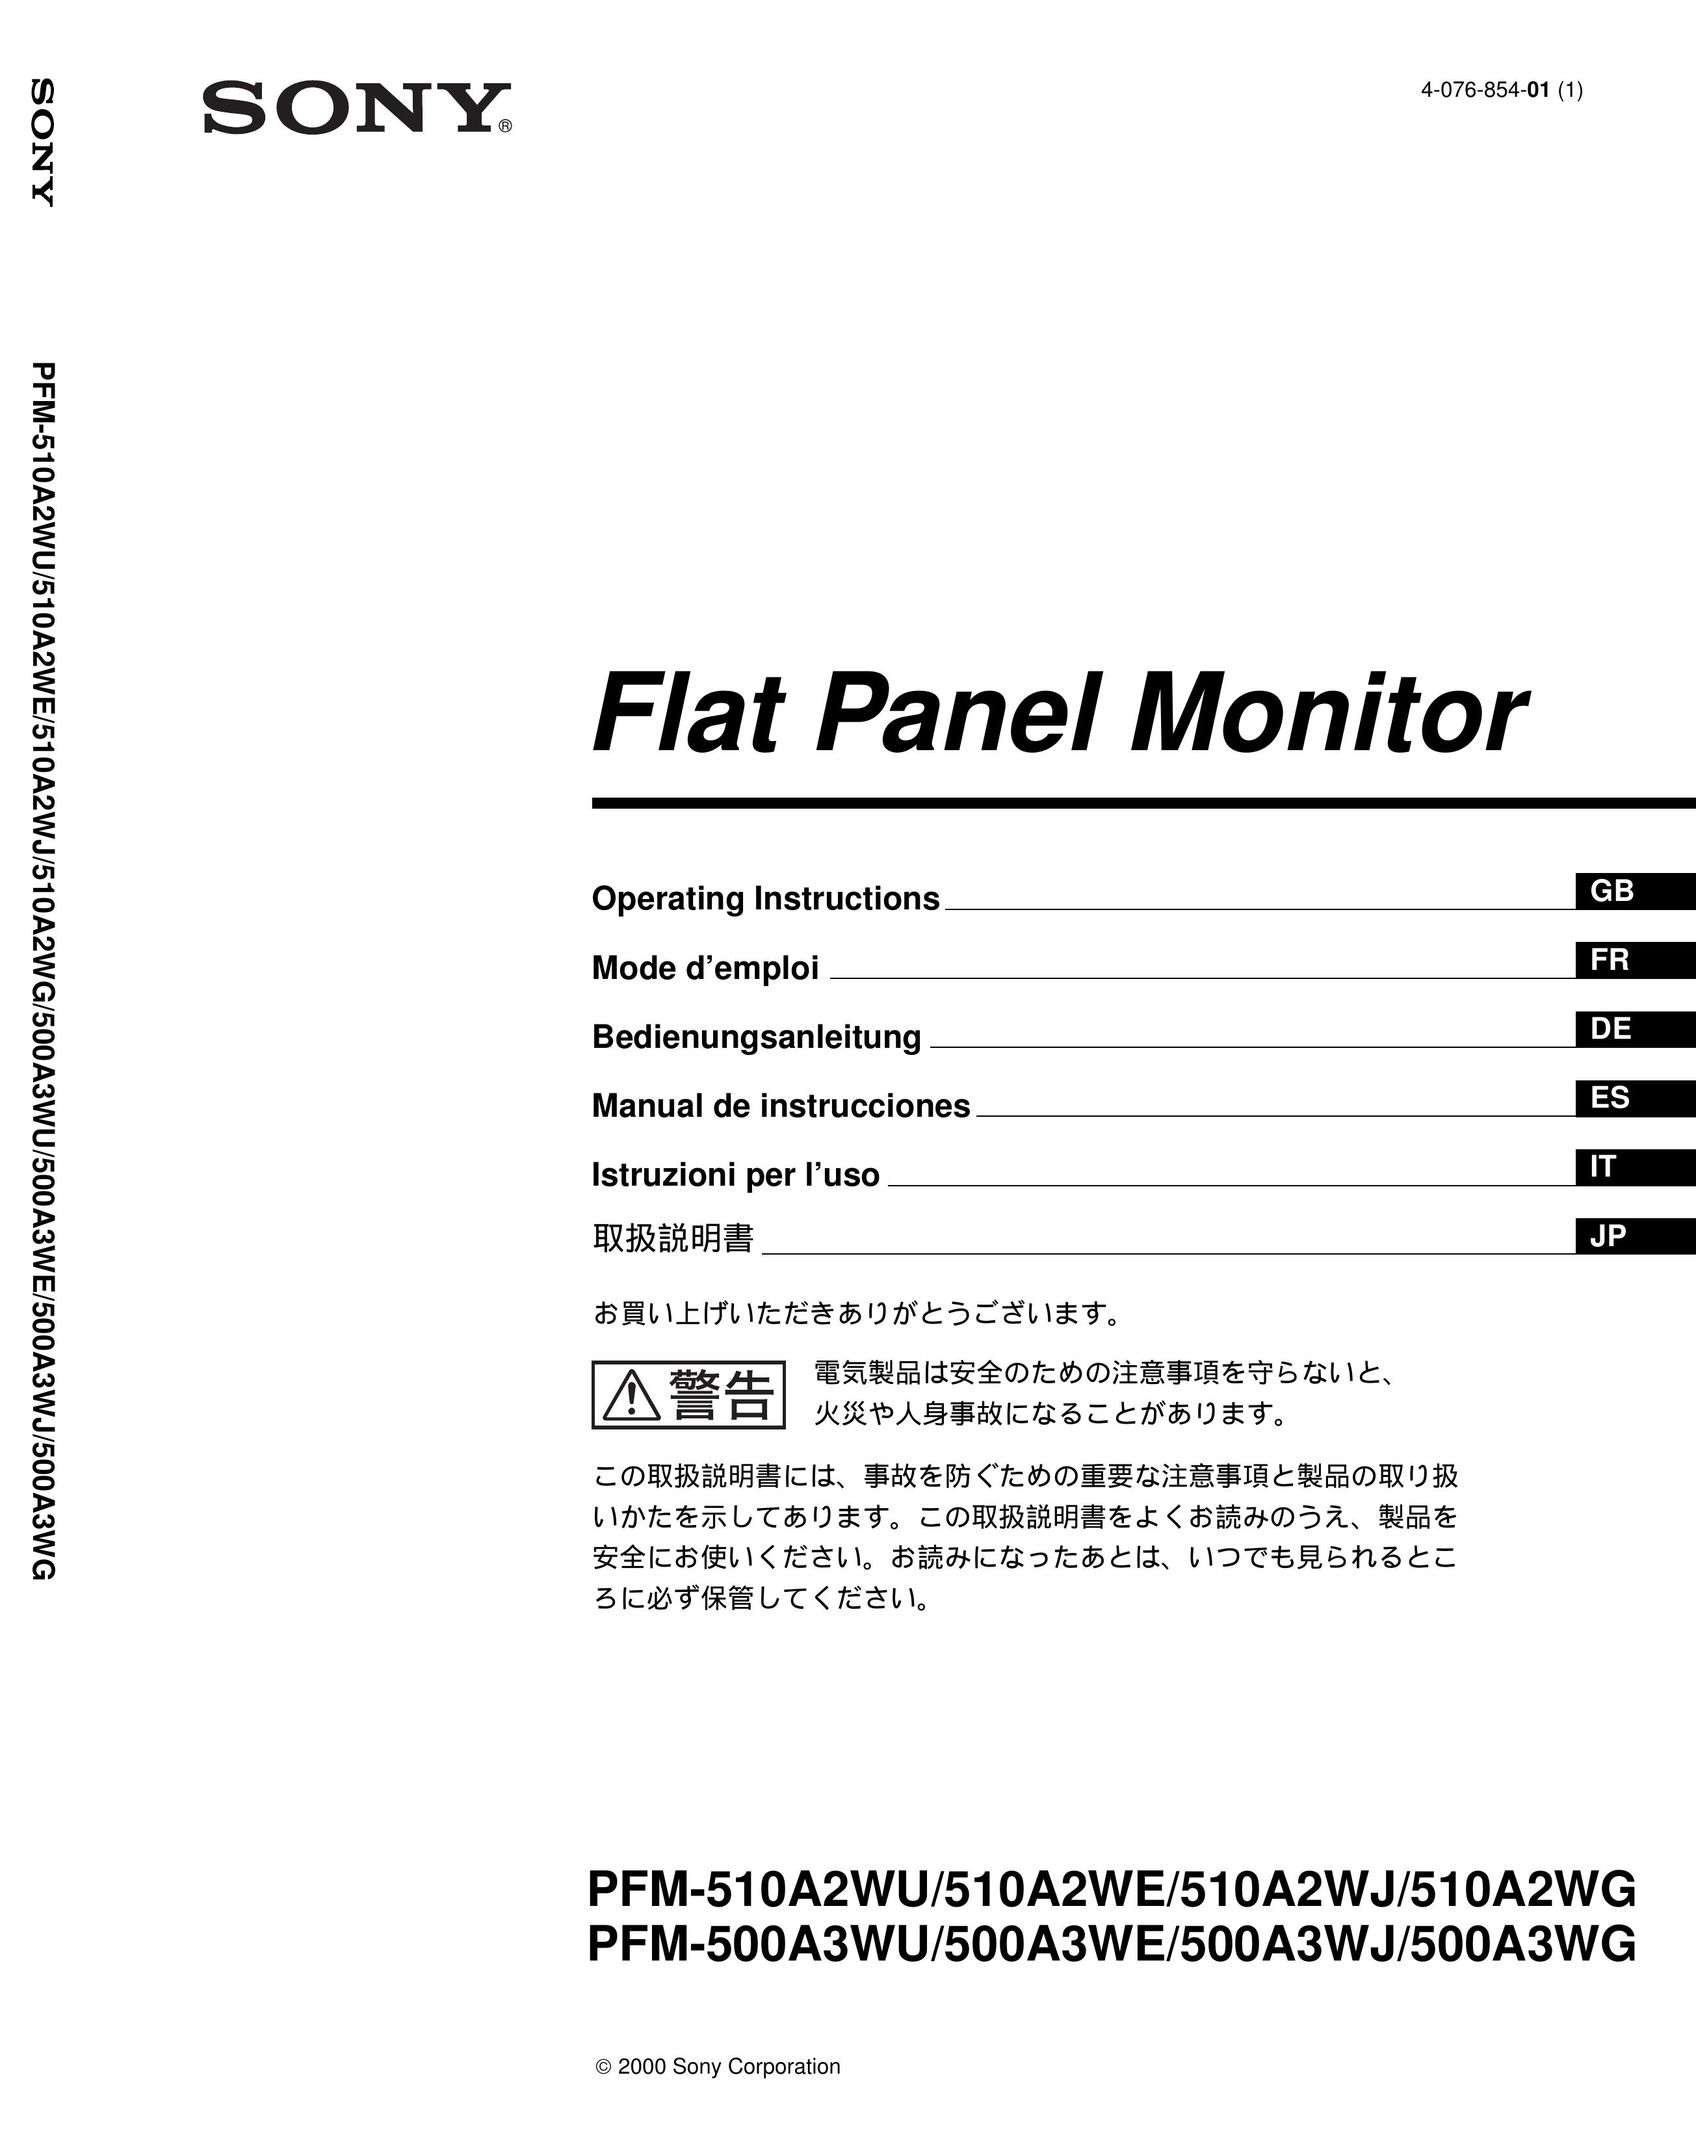 Sony 510A2WJ Computer Monitor User Manual